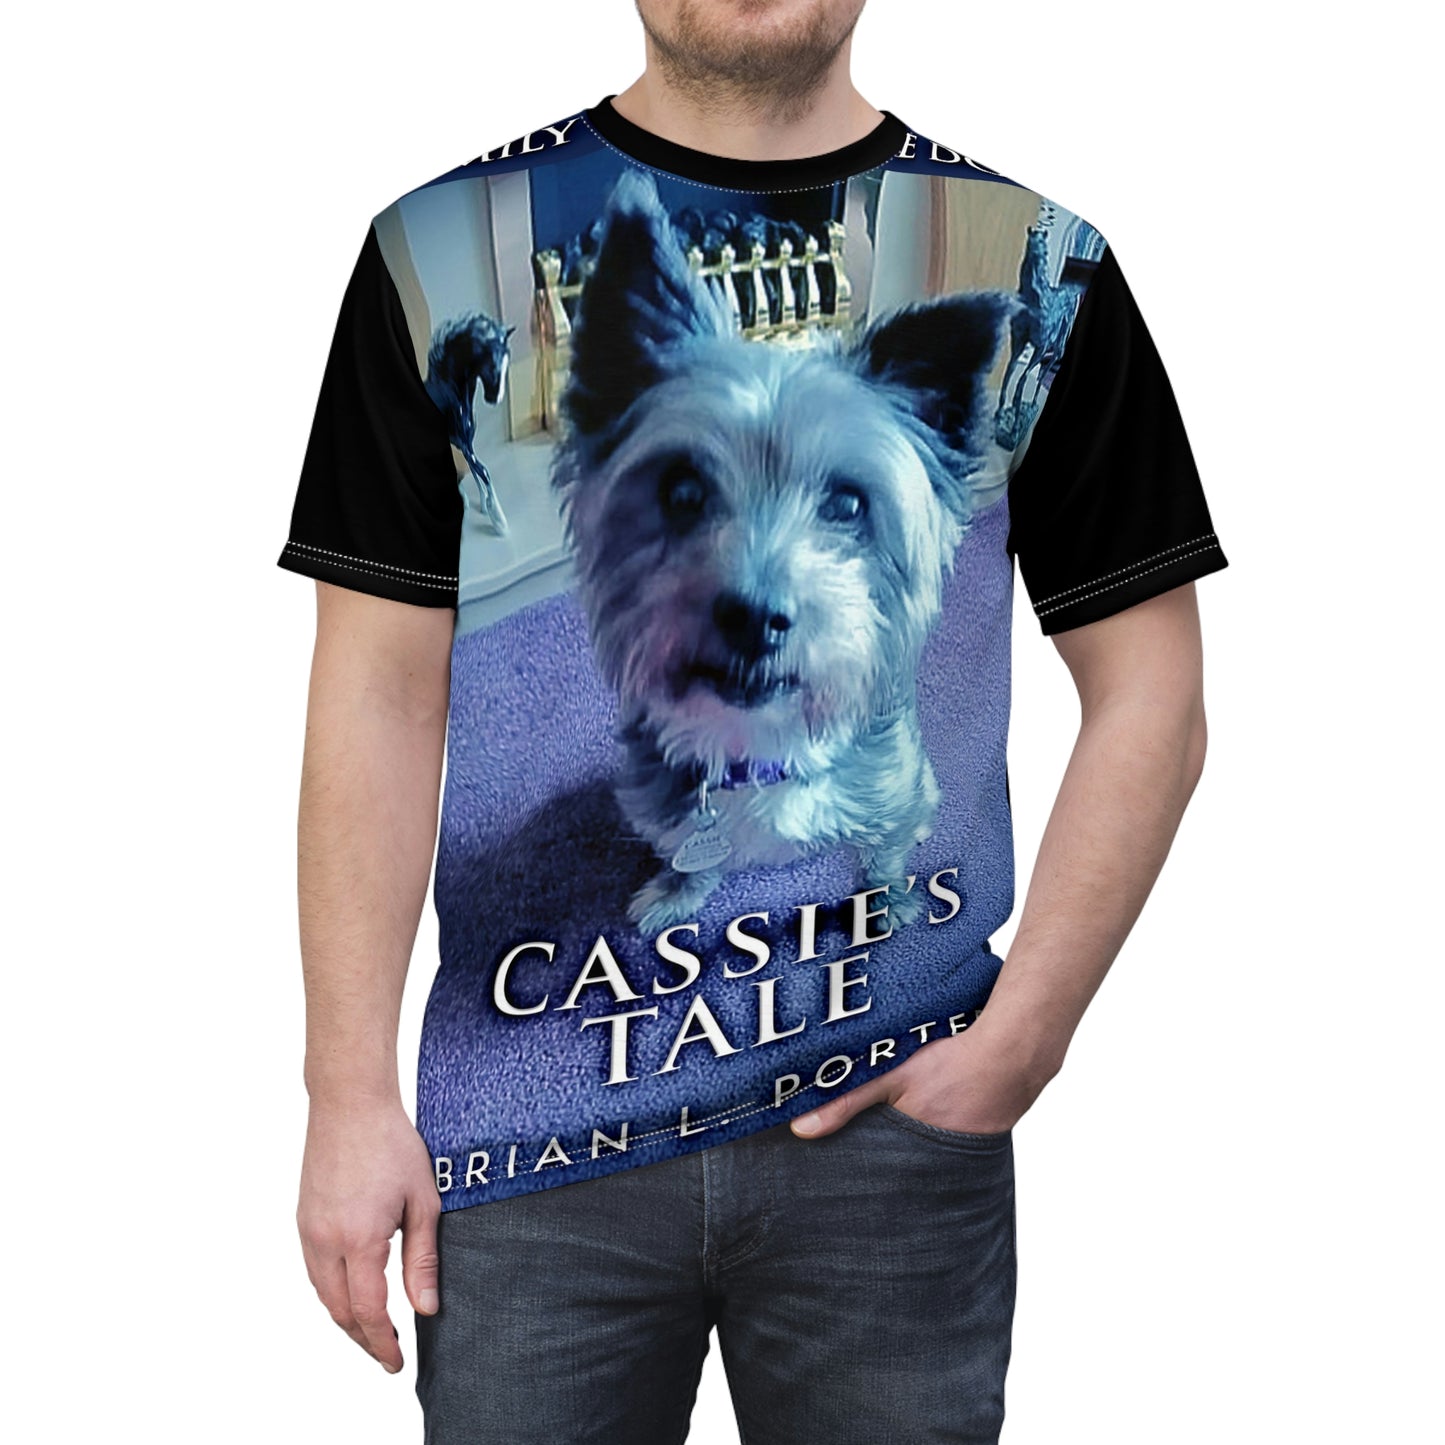 Cassie's Tale - Unisex All-Over Print Cut & Sew T-Shirt